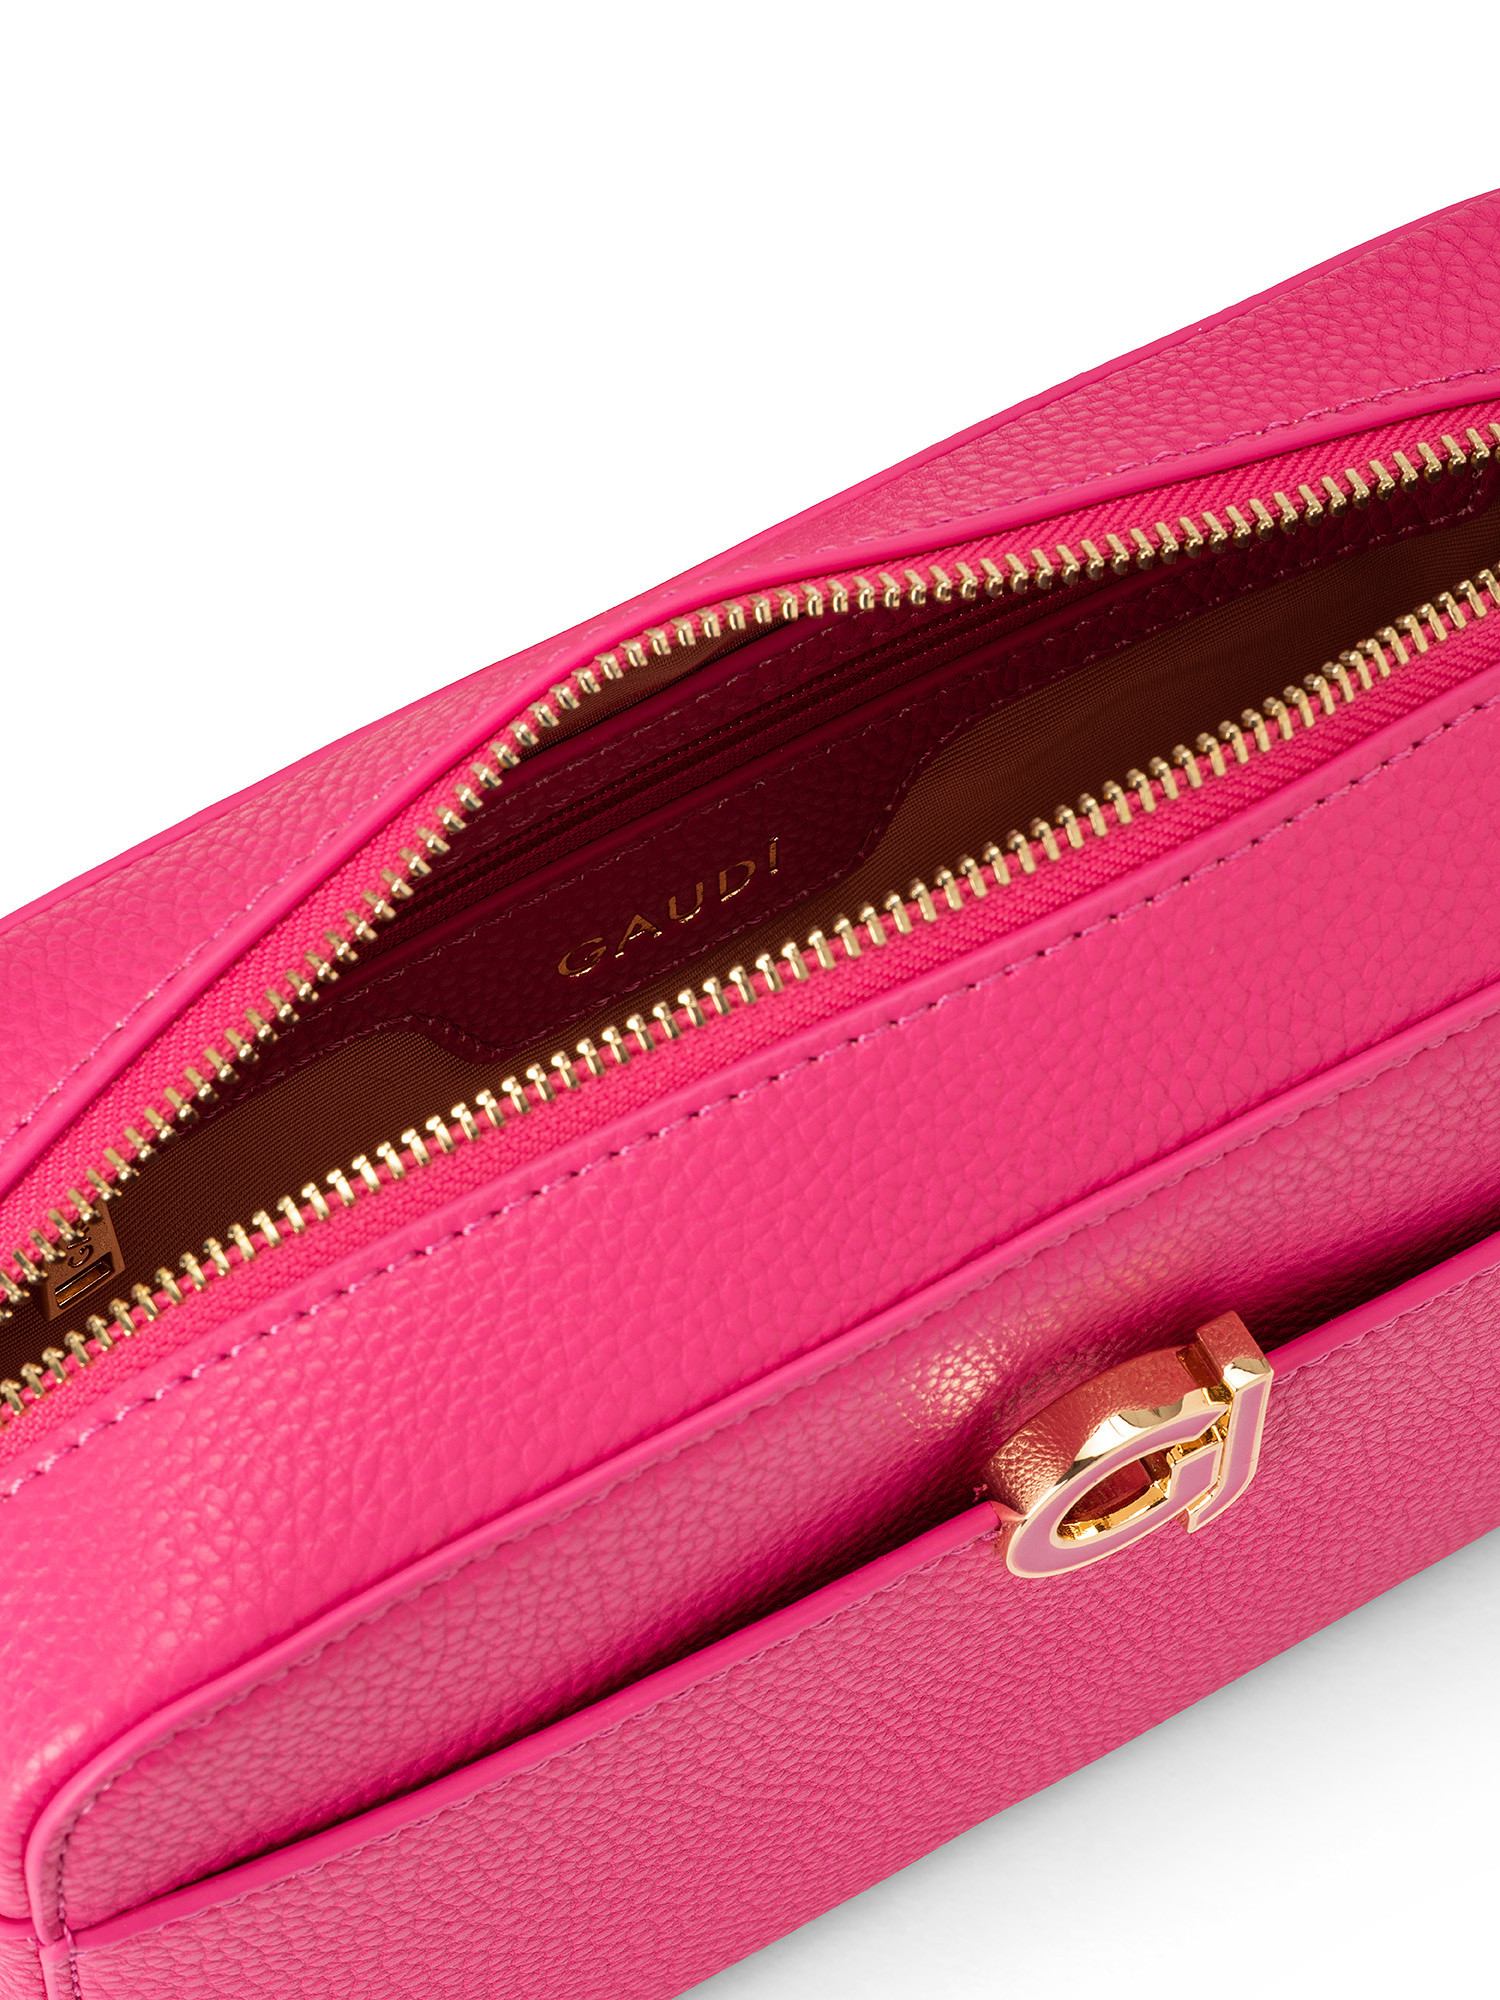 Sapphire crossbody bag, Pink Fuchsia, large image number 2